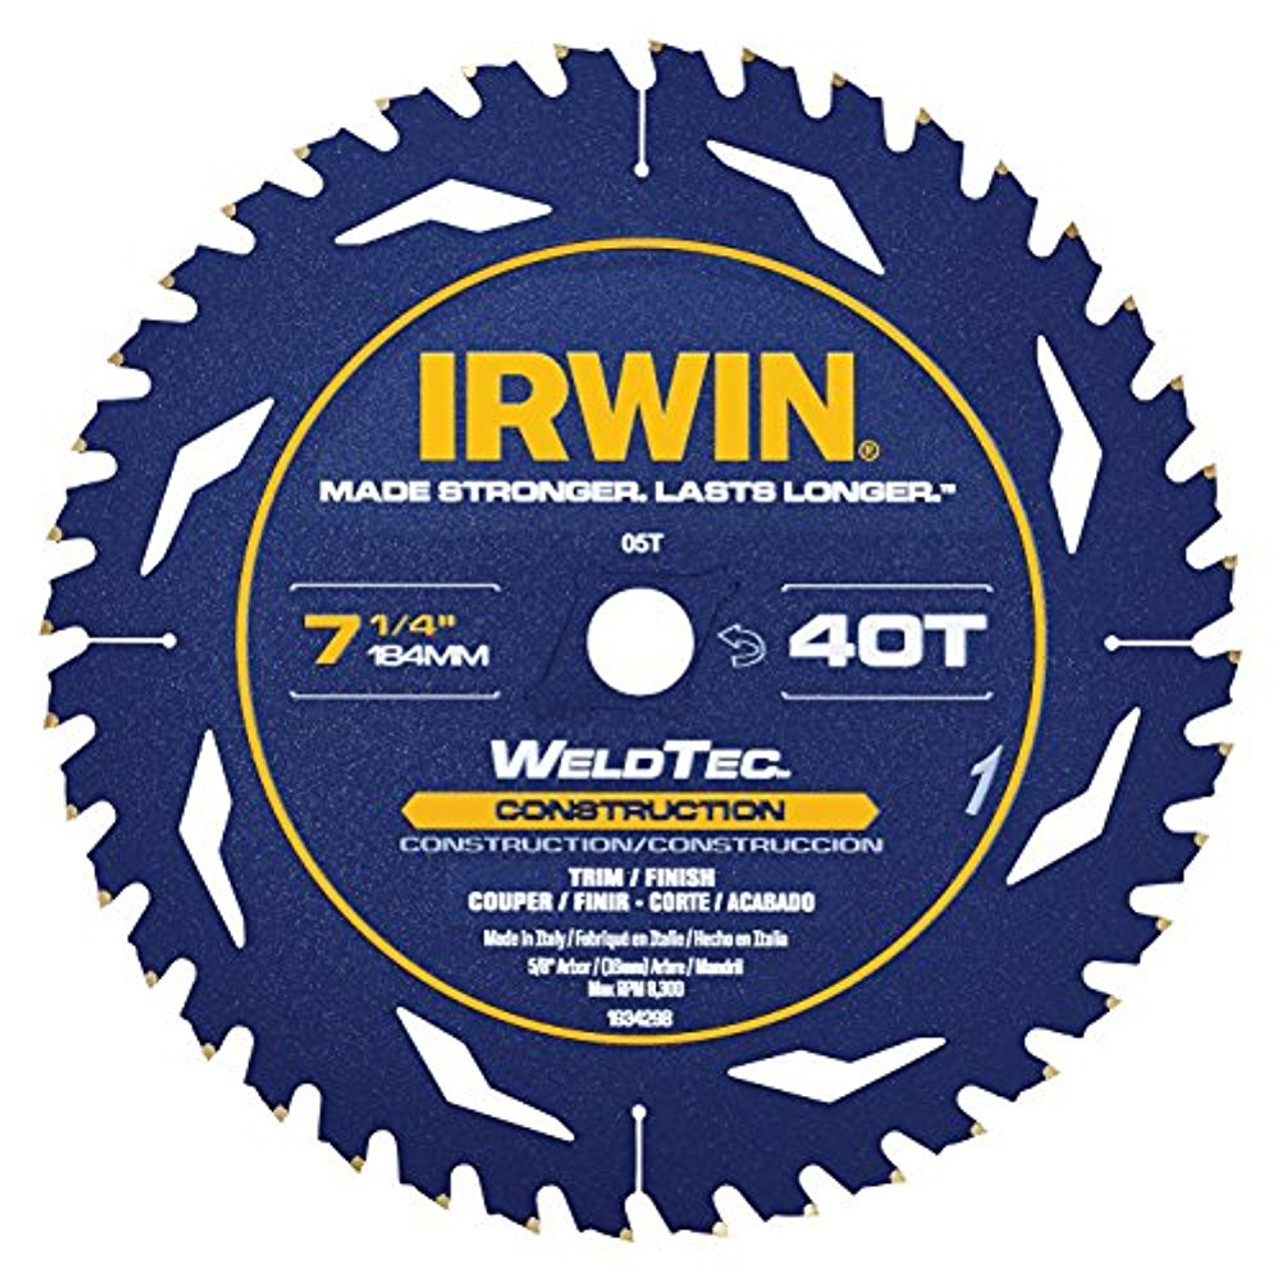 Newell Rubbermaid 1934299 Irwin Tools 40-Tooth WeldTec Corded Circular Trim/Finish Saw Blade, 7-1/4